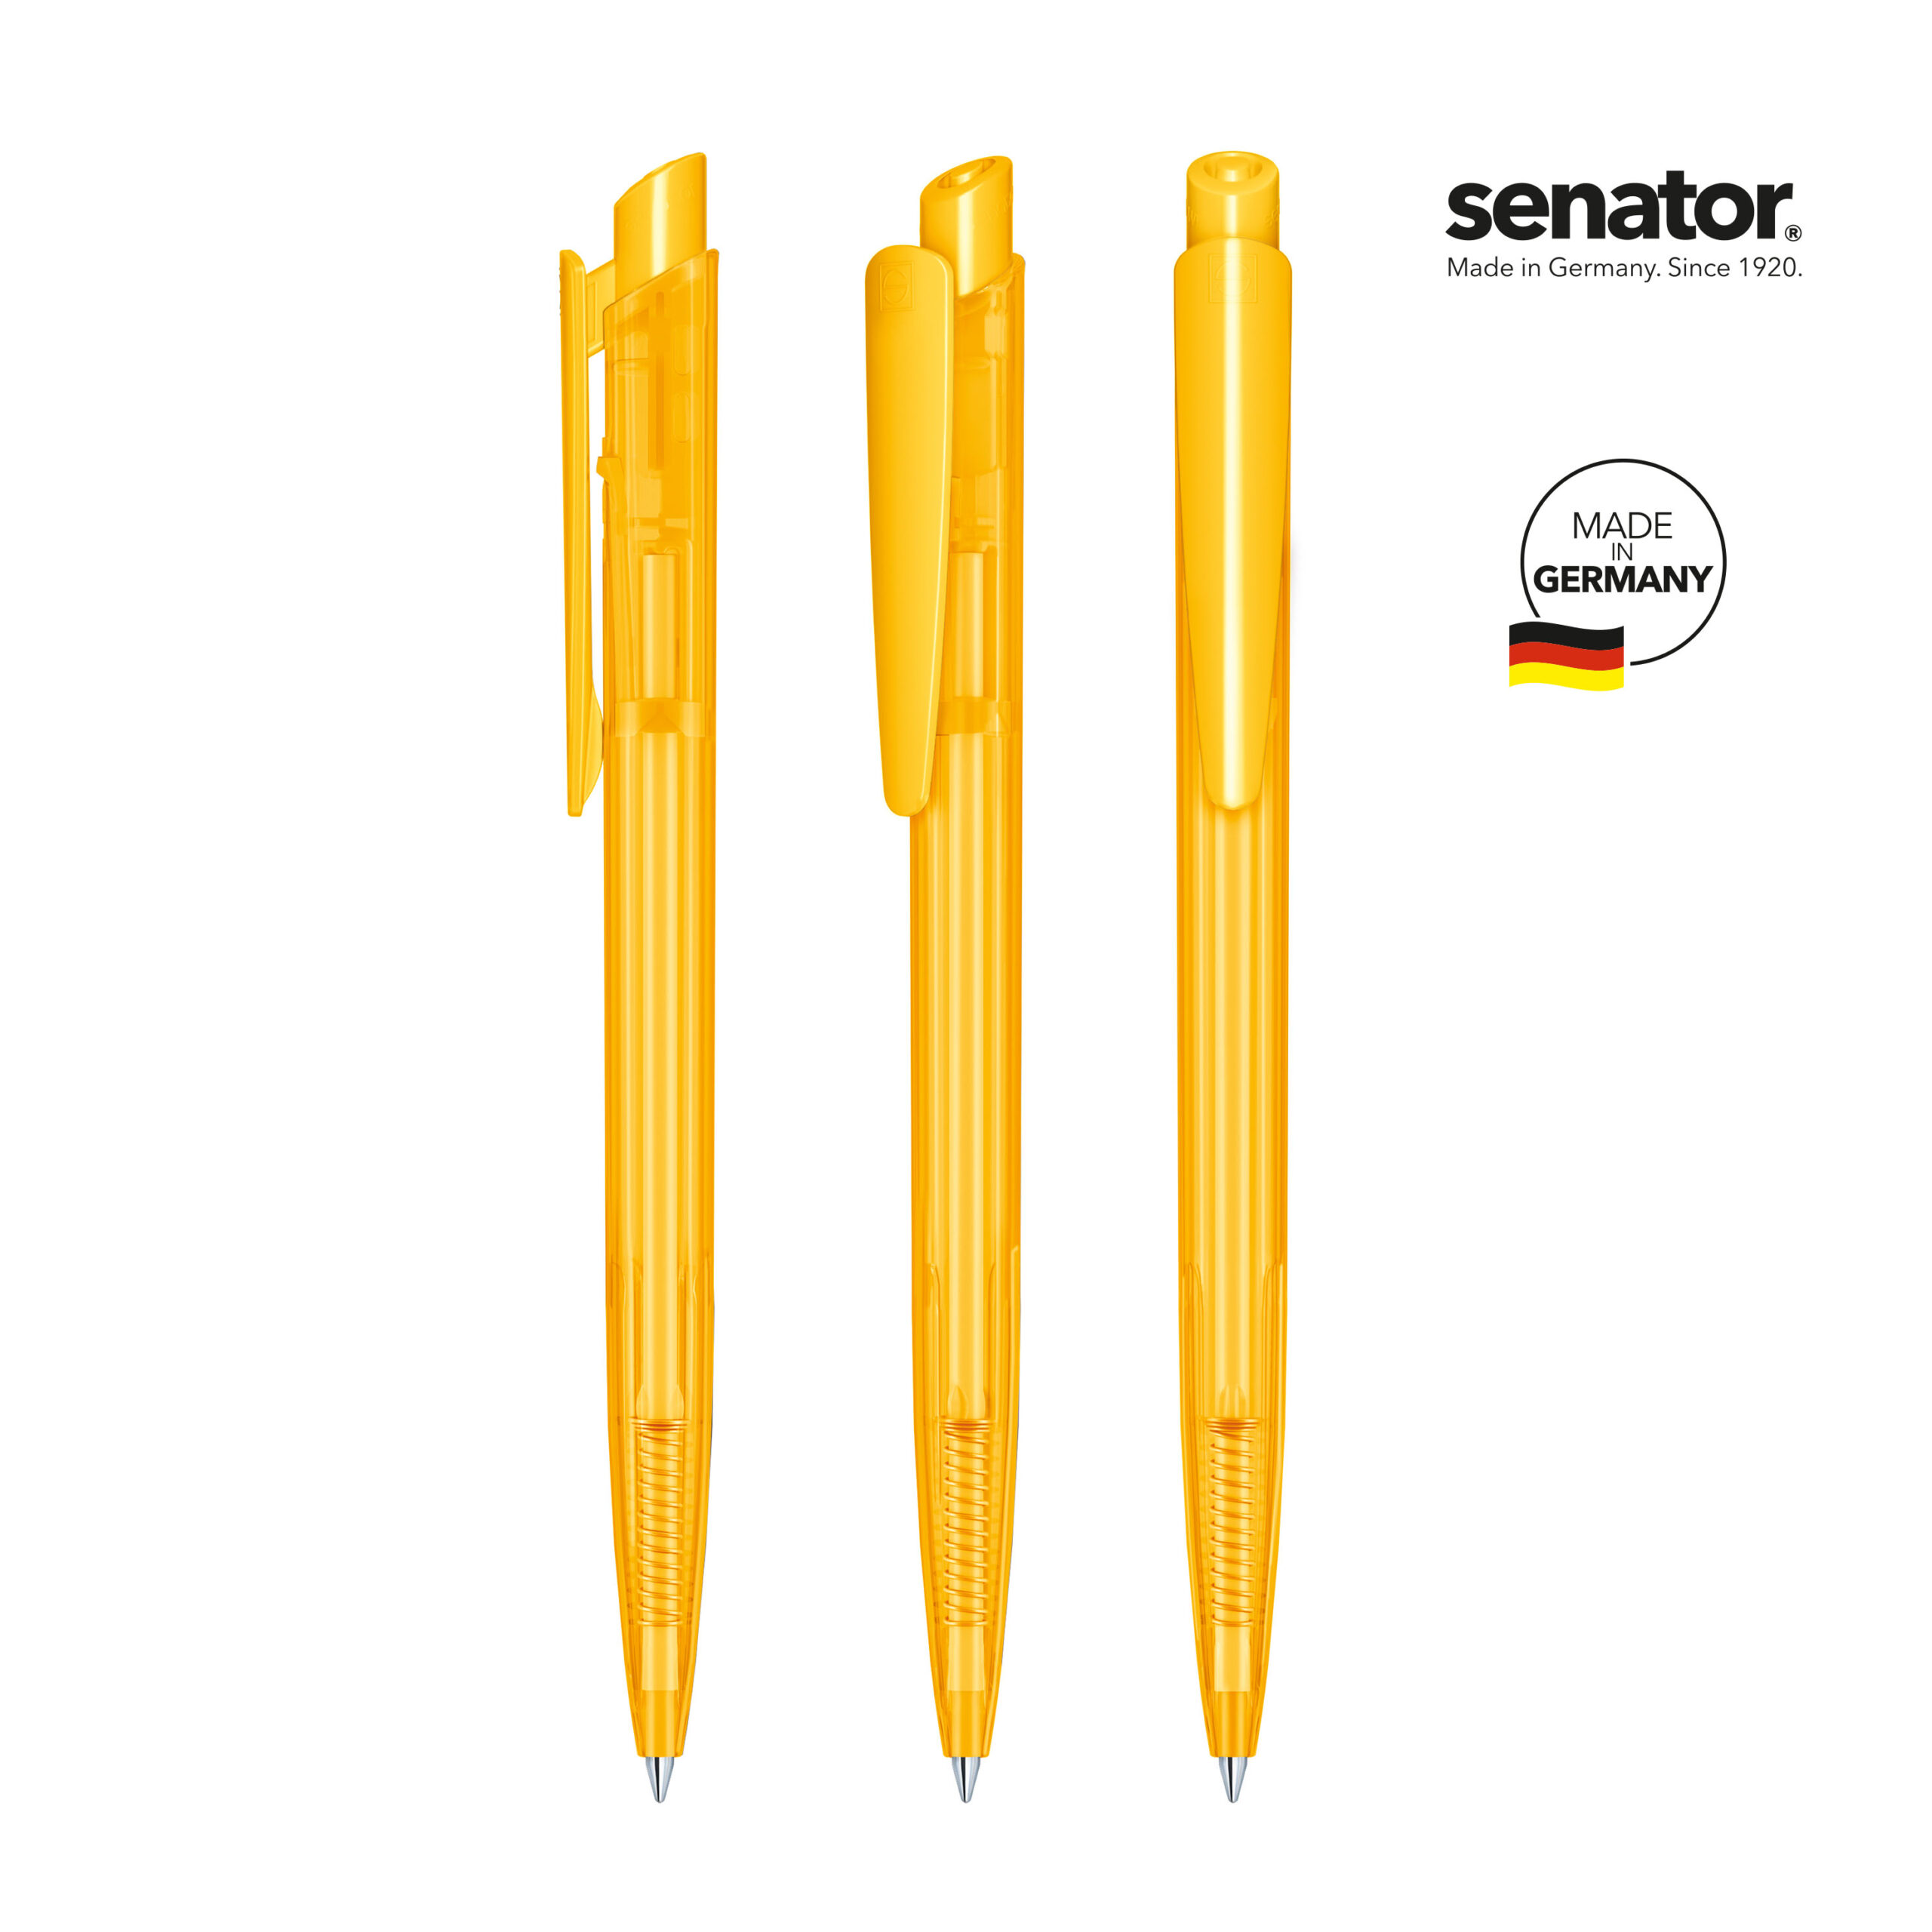 2602-senator-dart-clear-pms-7408-5-p